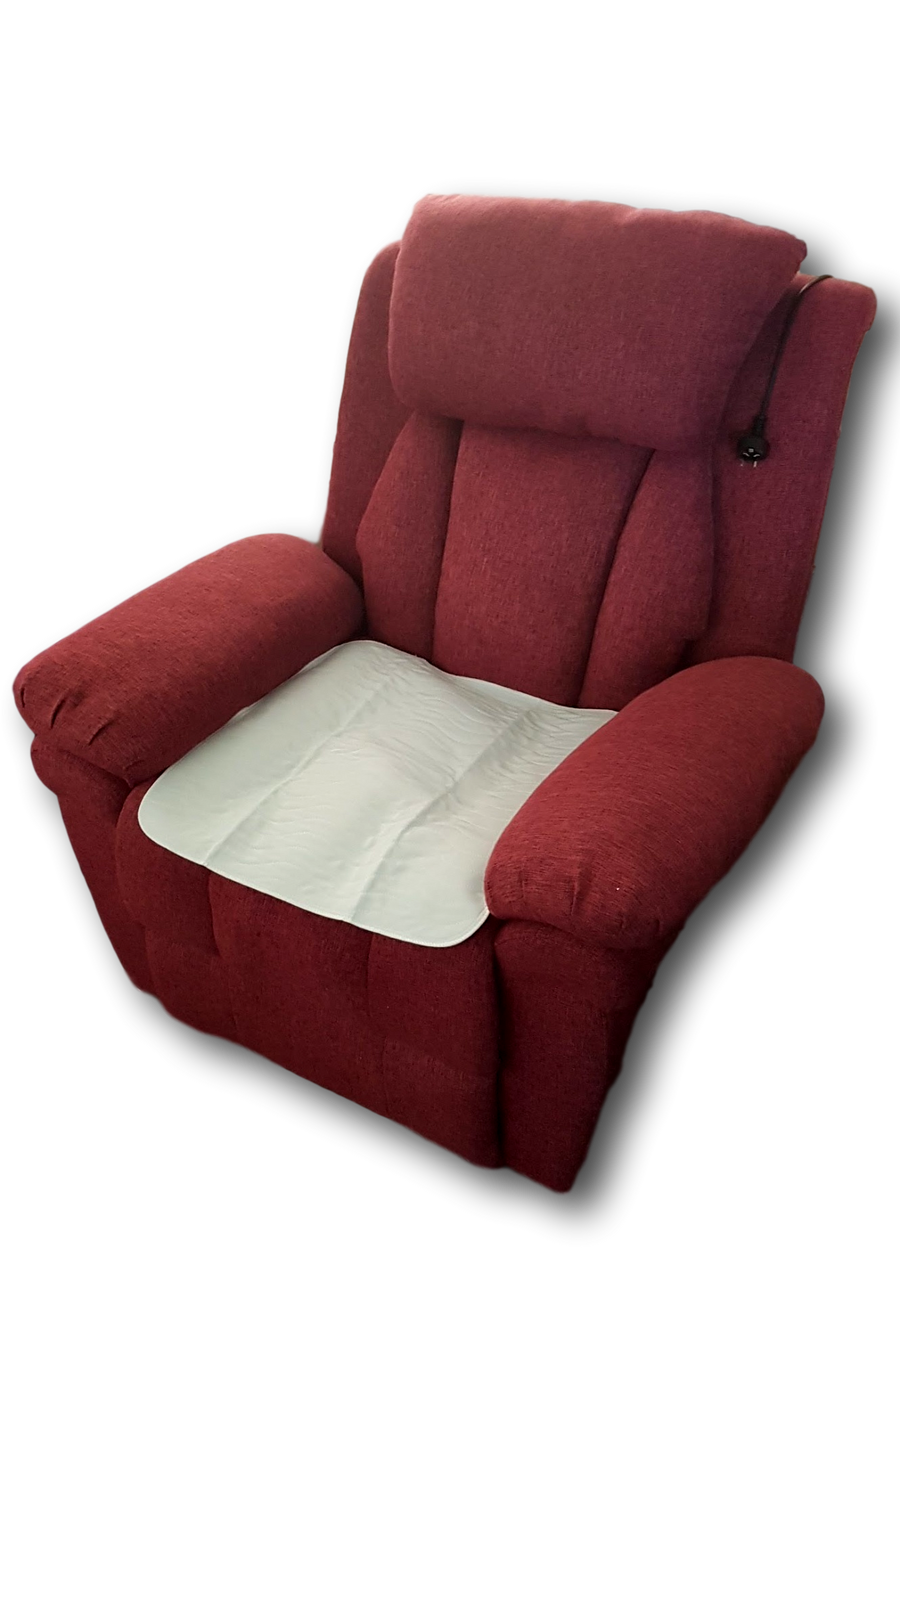 iCare Chair Pad - 53x53
